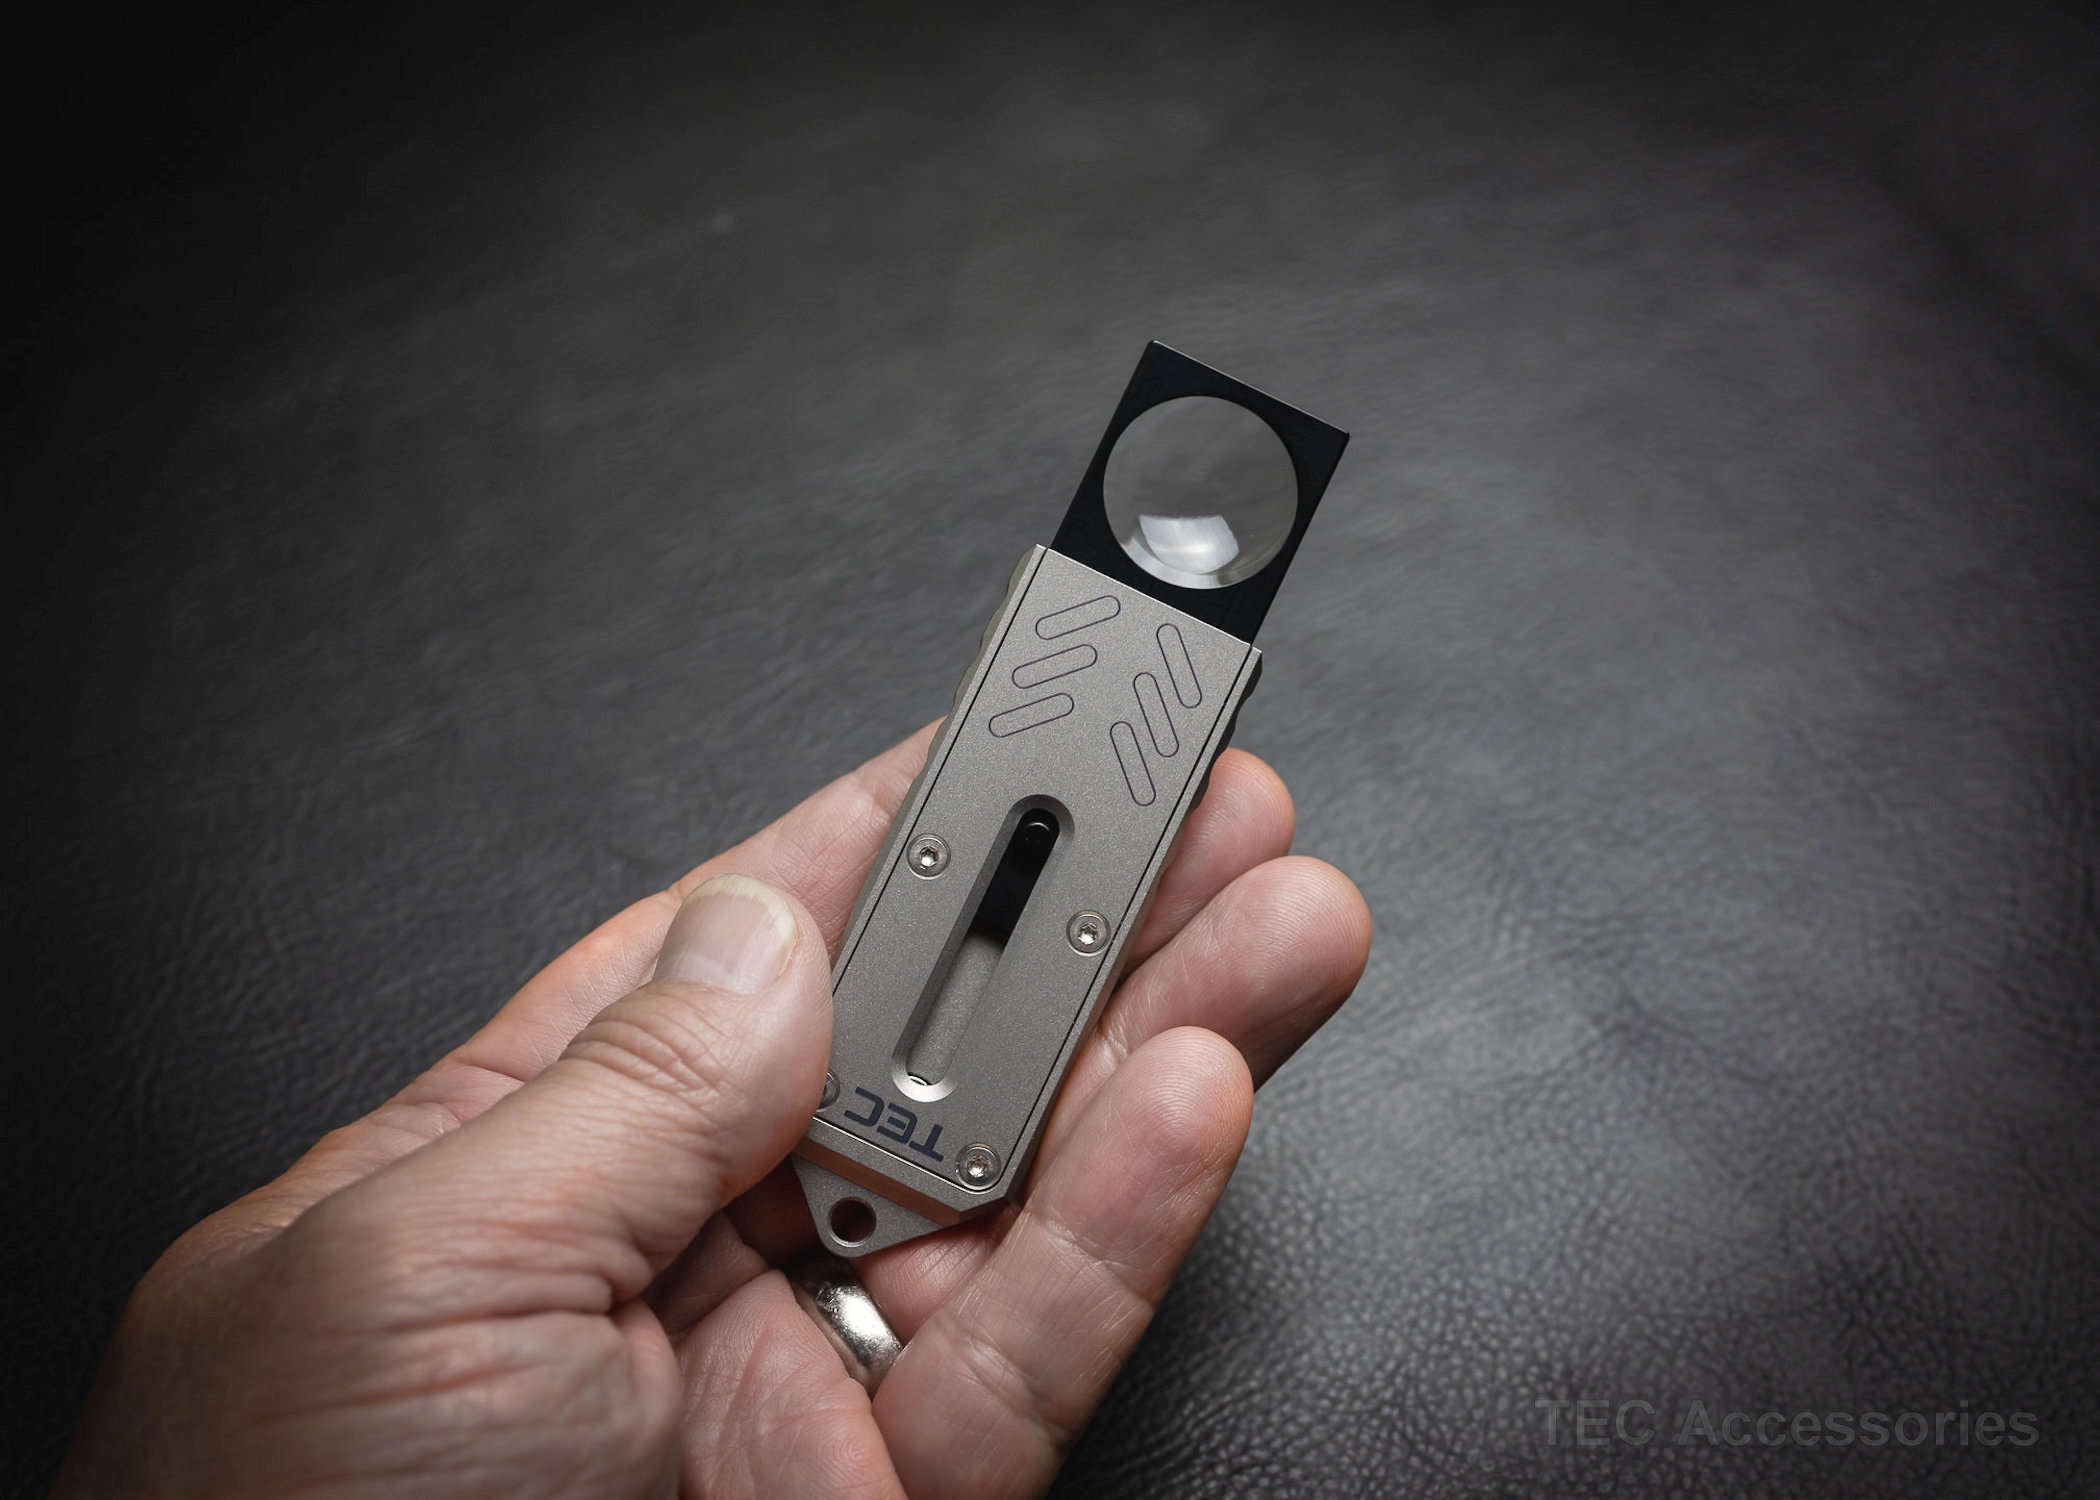 Titan Zoom - Sapphire Pocket Magnifier by Maratac®